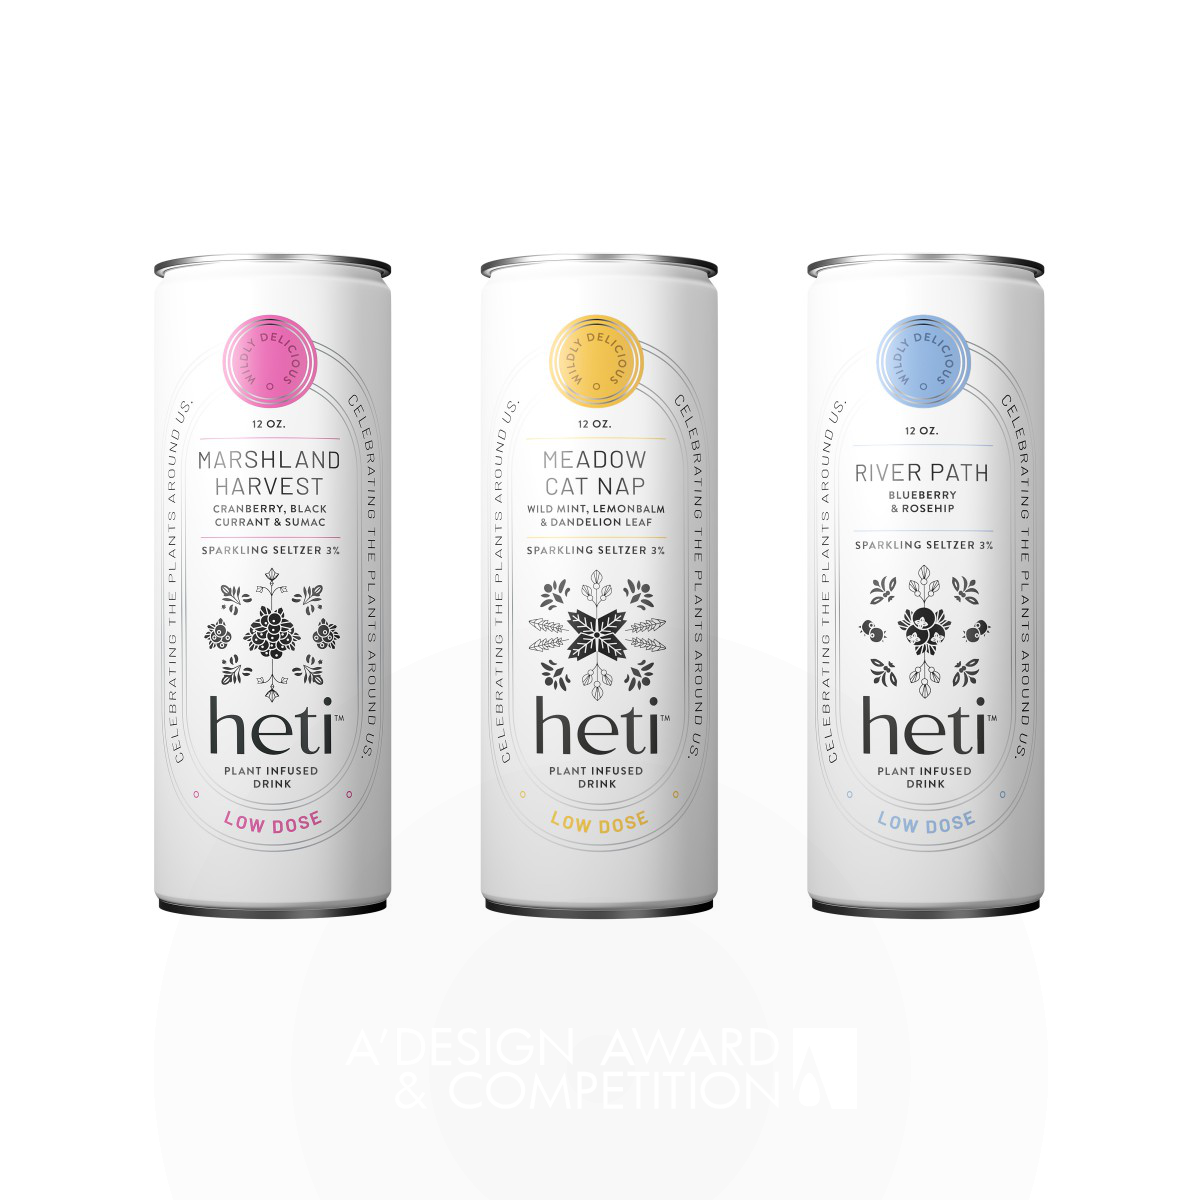 Heti Branding And Packaging by Cansu Dagbagli Ferreira